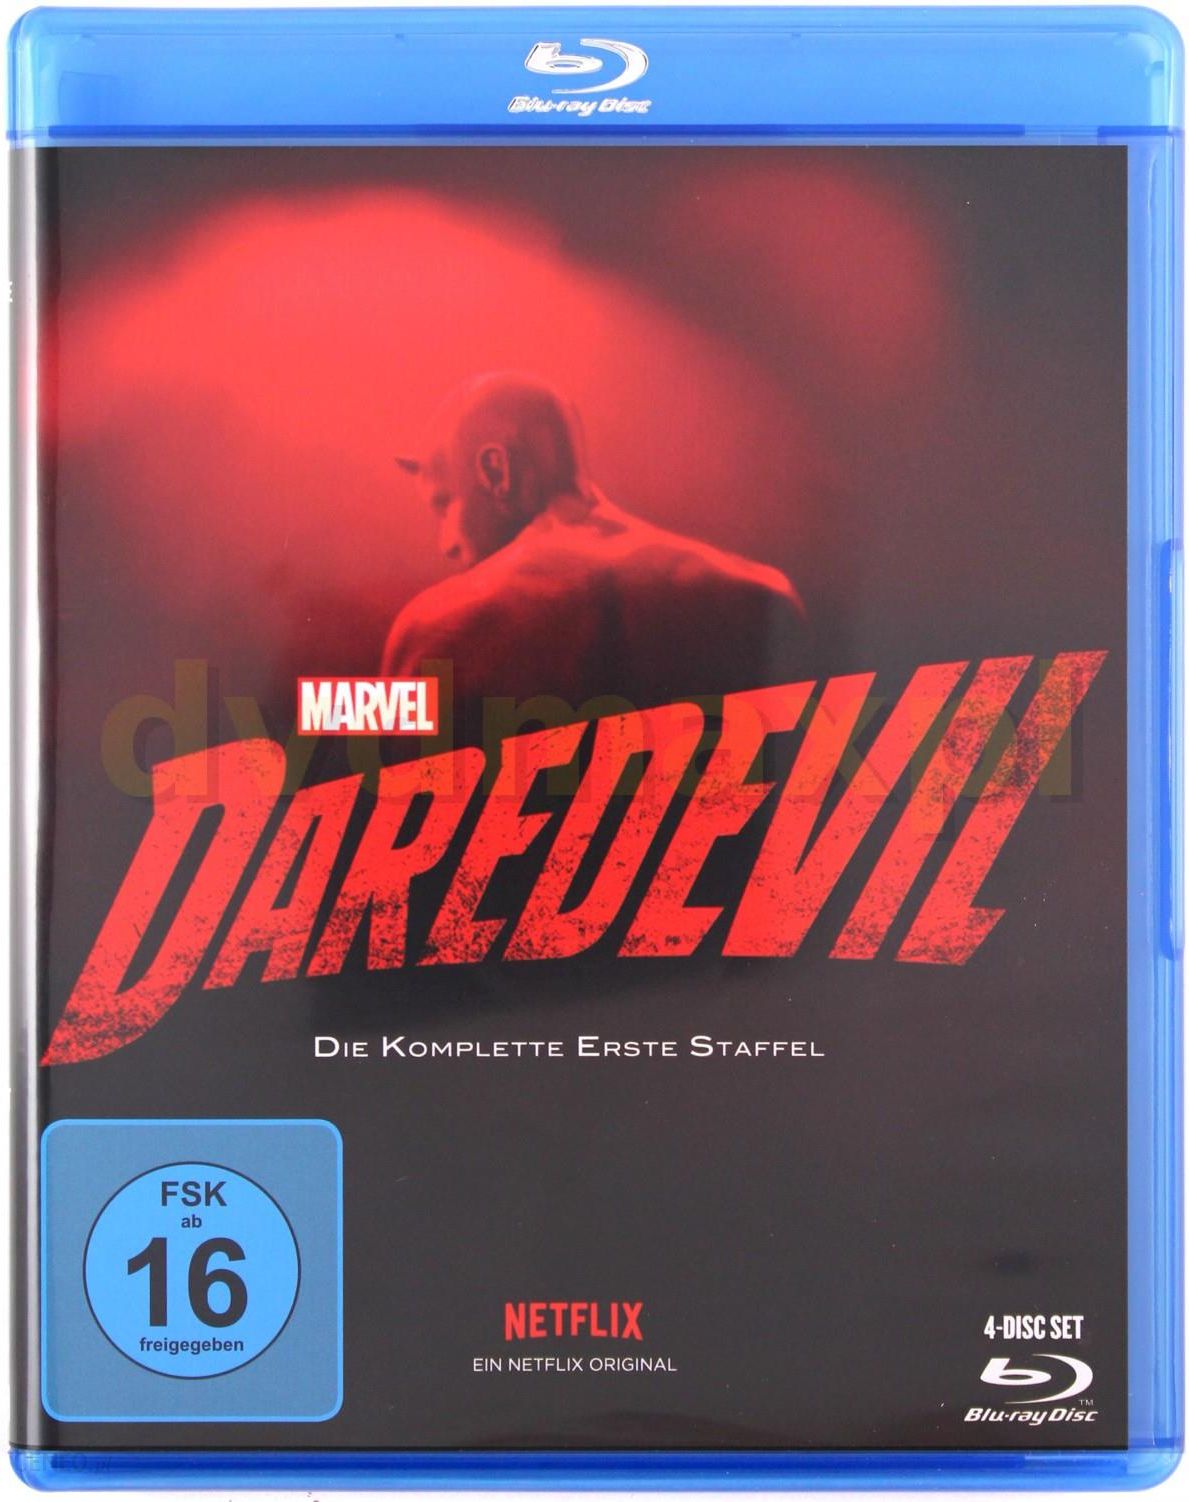 daredevil season 1 blu ray release date